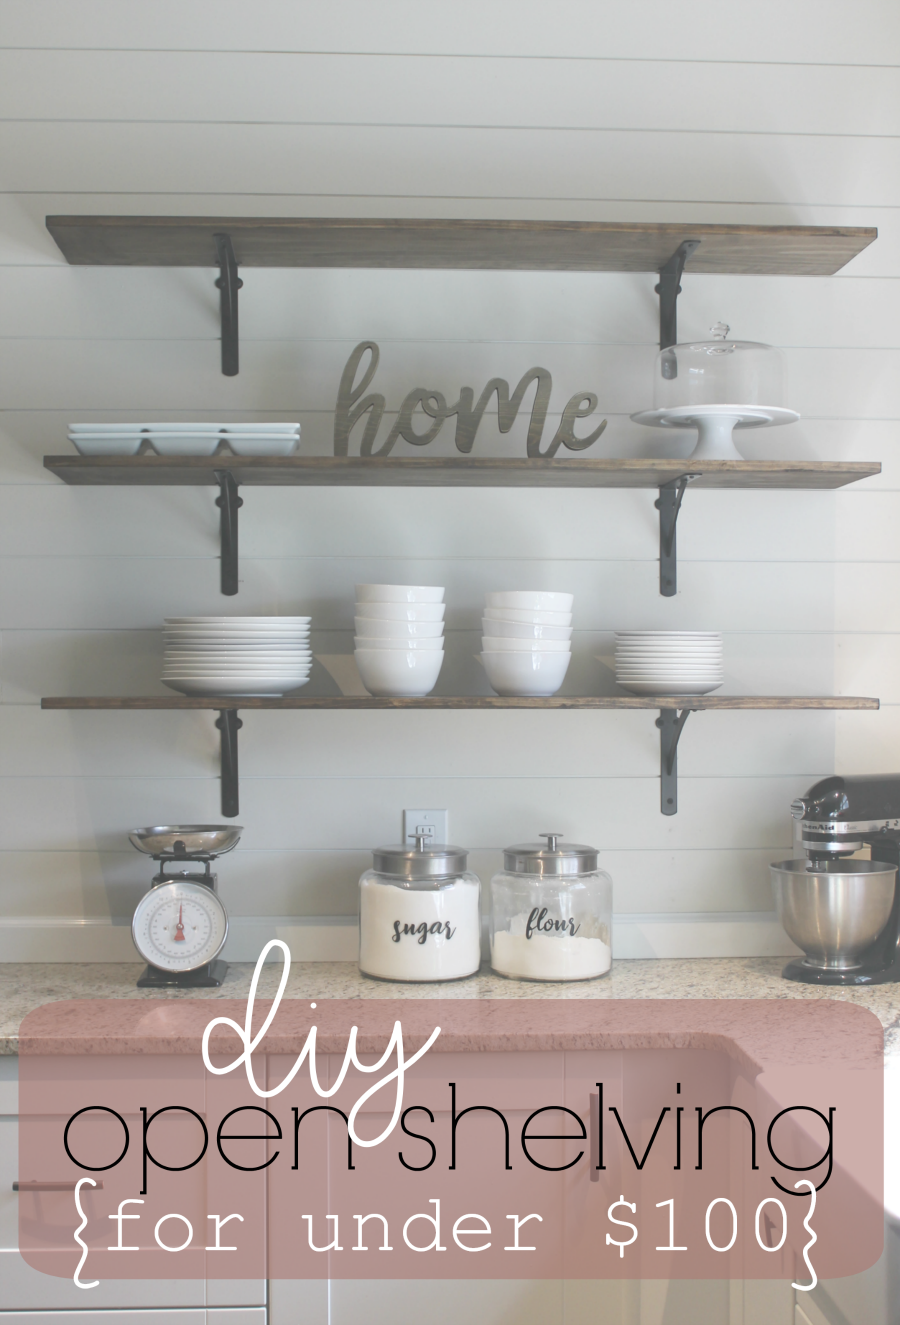 How to build DIY kitchen shelves - Pinterest image